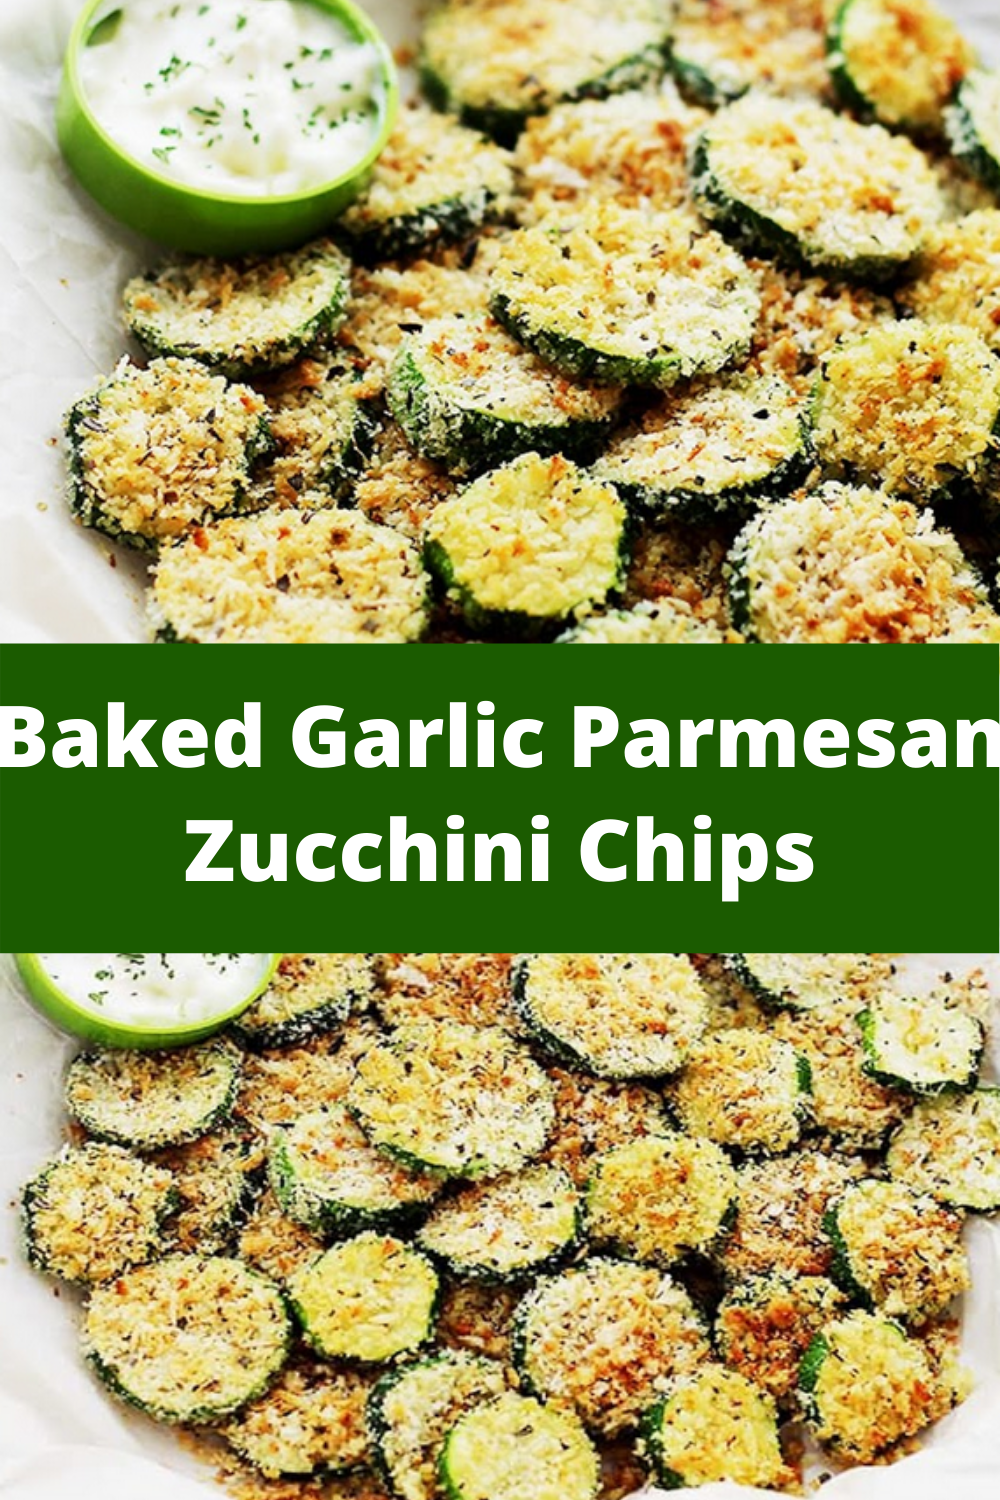 Baked Garlic Parmesan Zucchini Chips